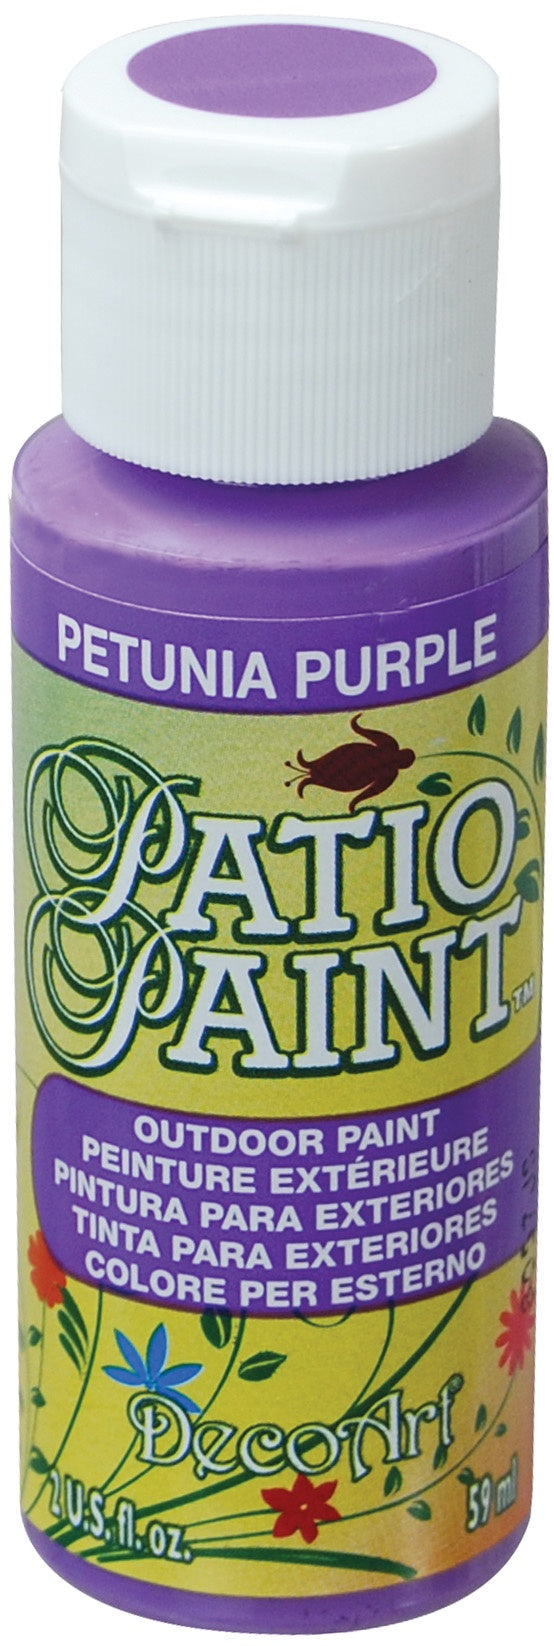 Deco Art Patio Paint 2oz - Petunia Purple